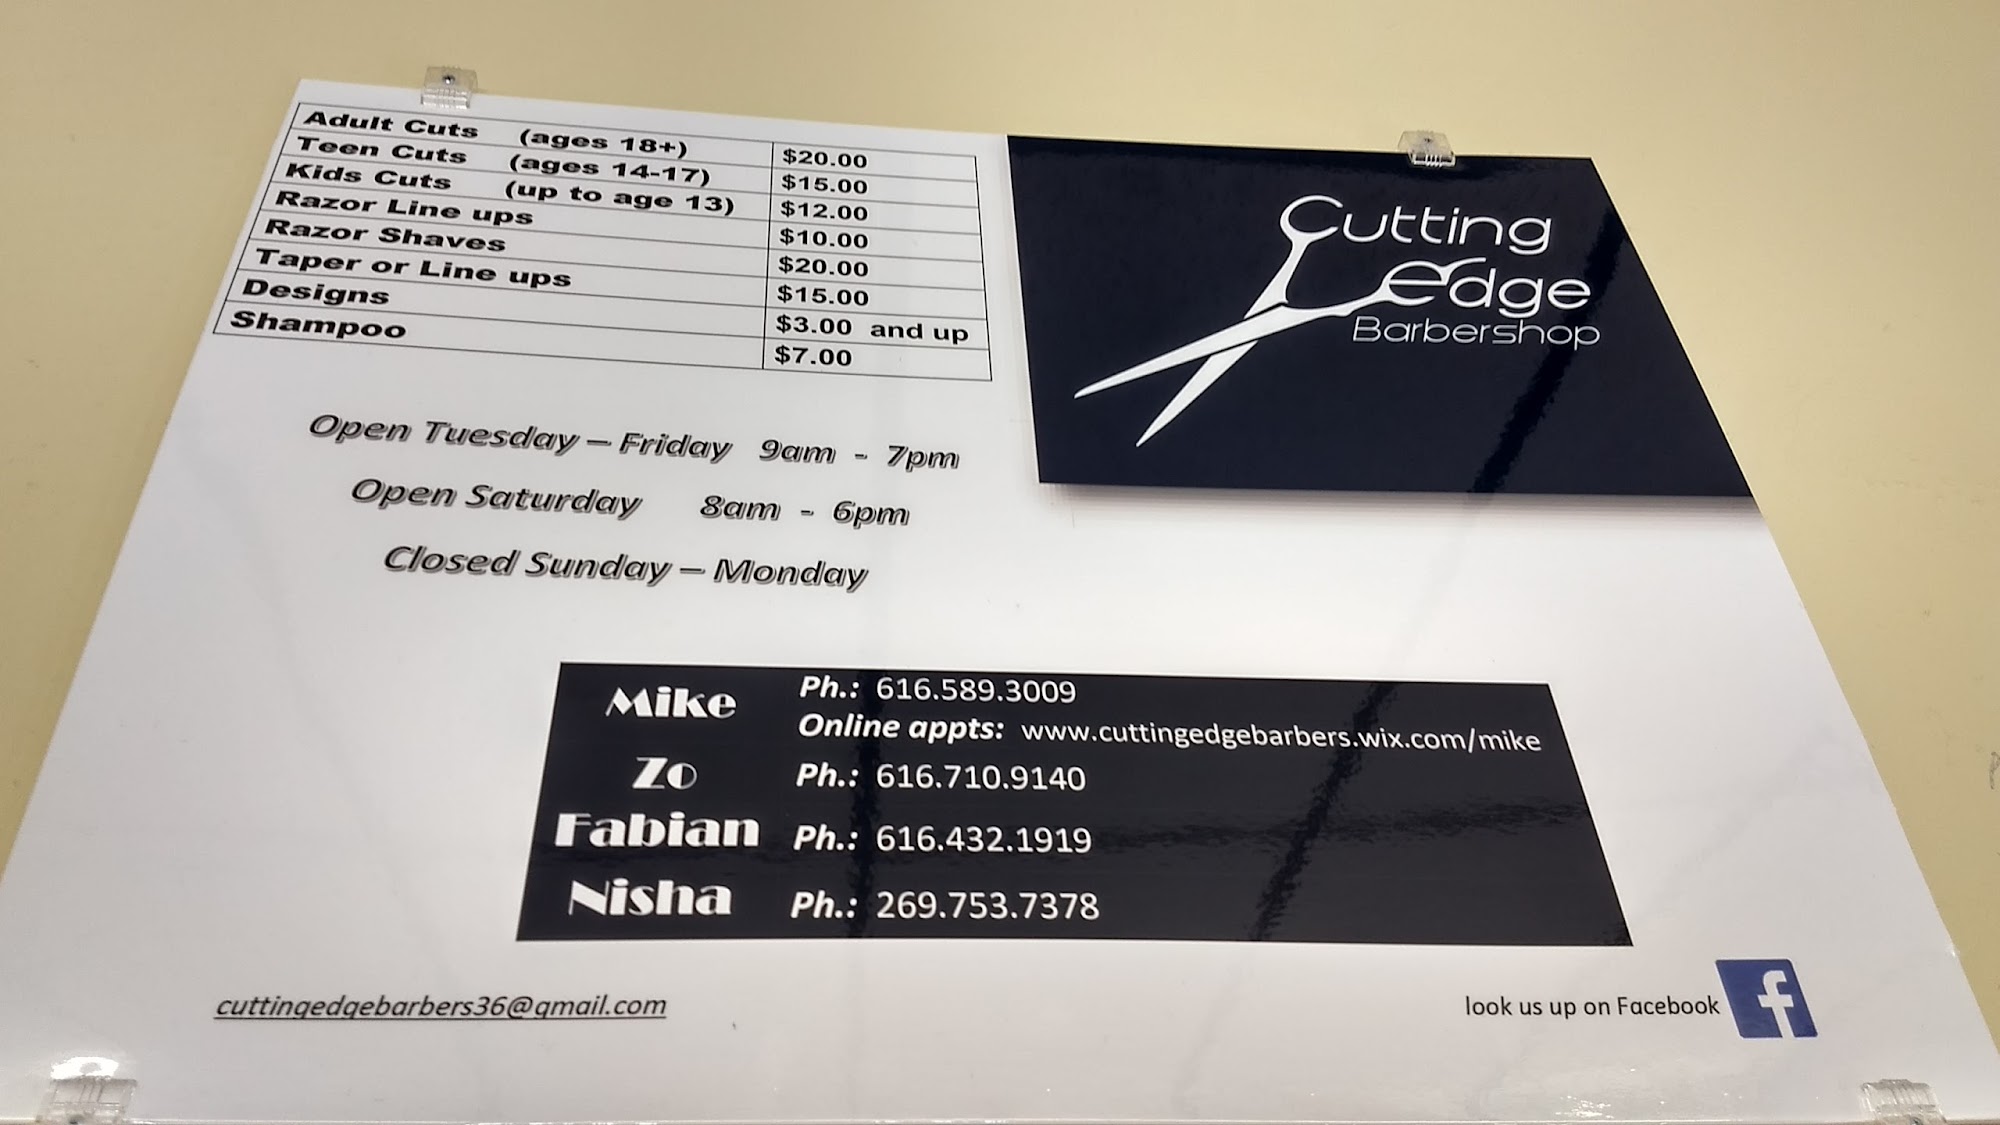 Cutting Edge Barbershop and Salon